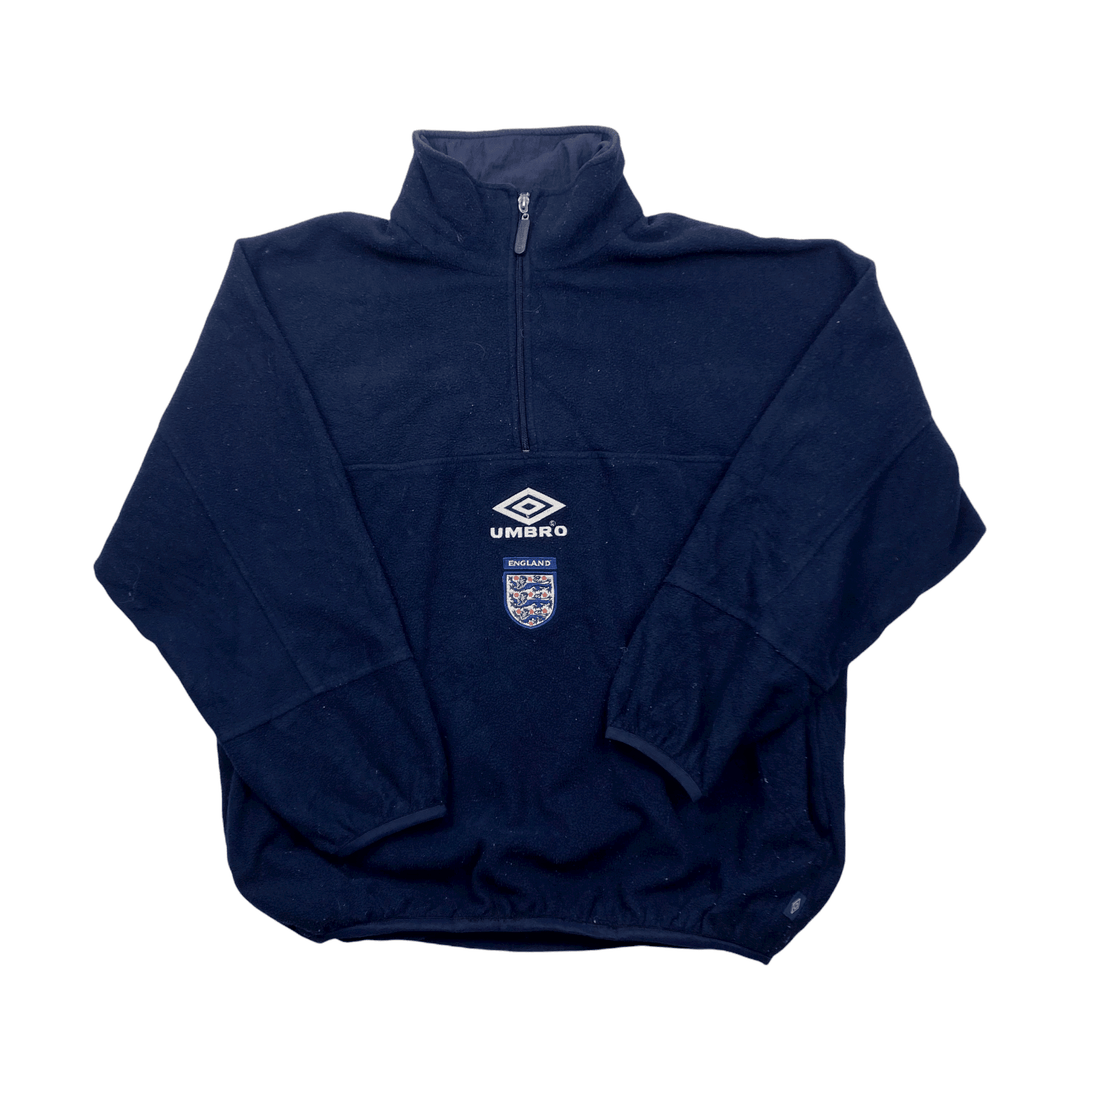 Vintage 90s Navy Blue Umbro England Football Quarter Zip Fleece - Large - The Streetwear Studio